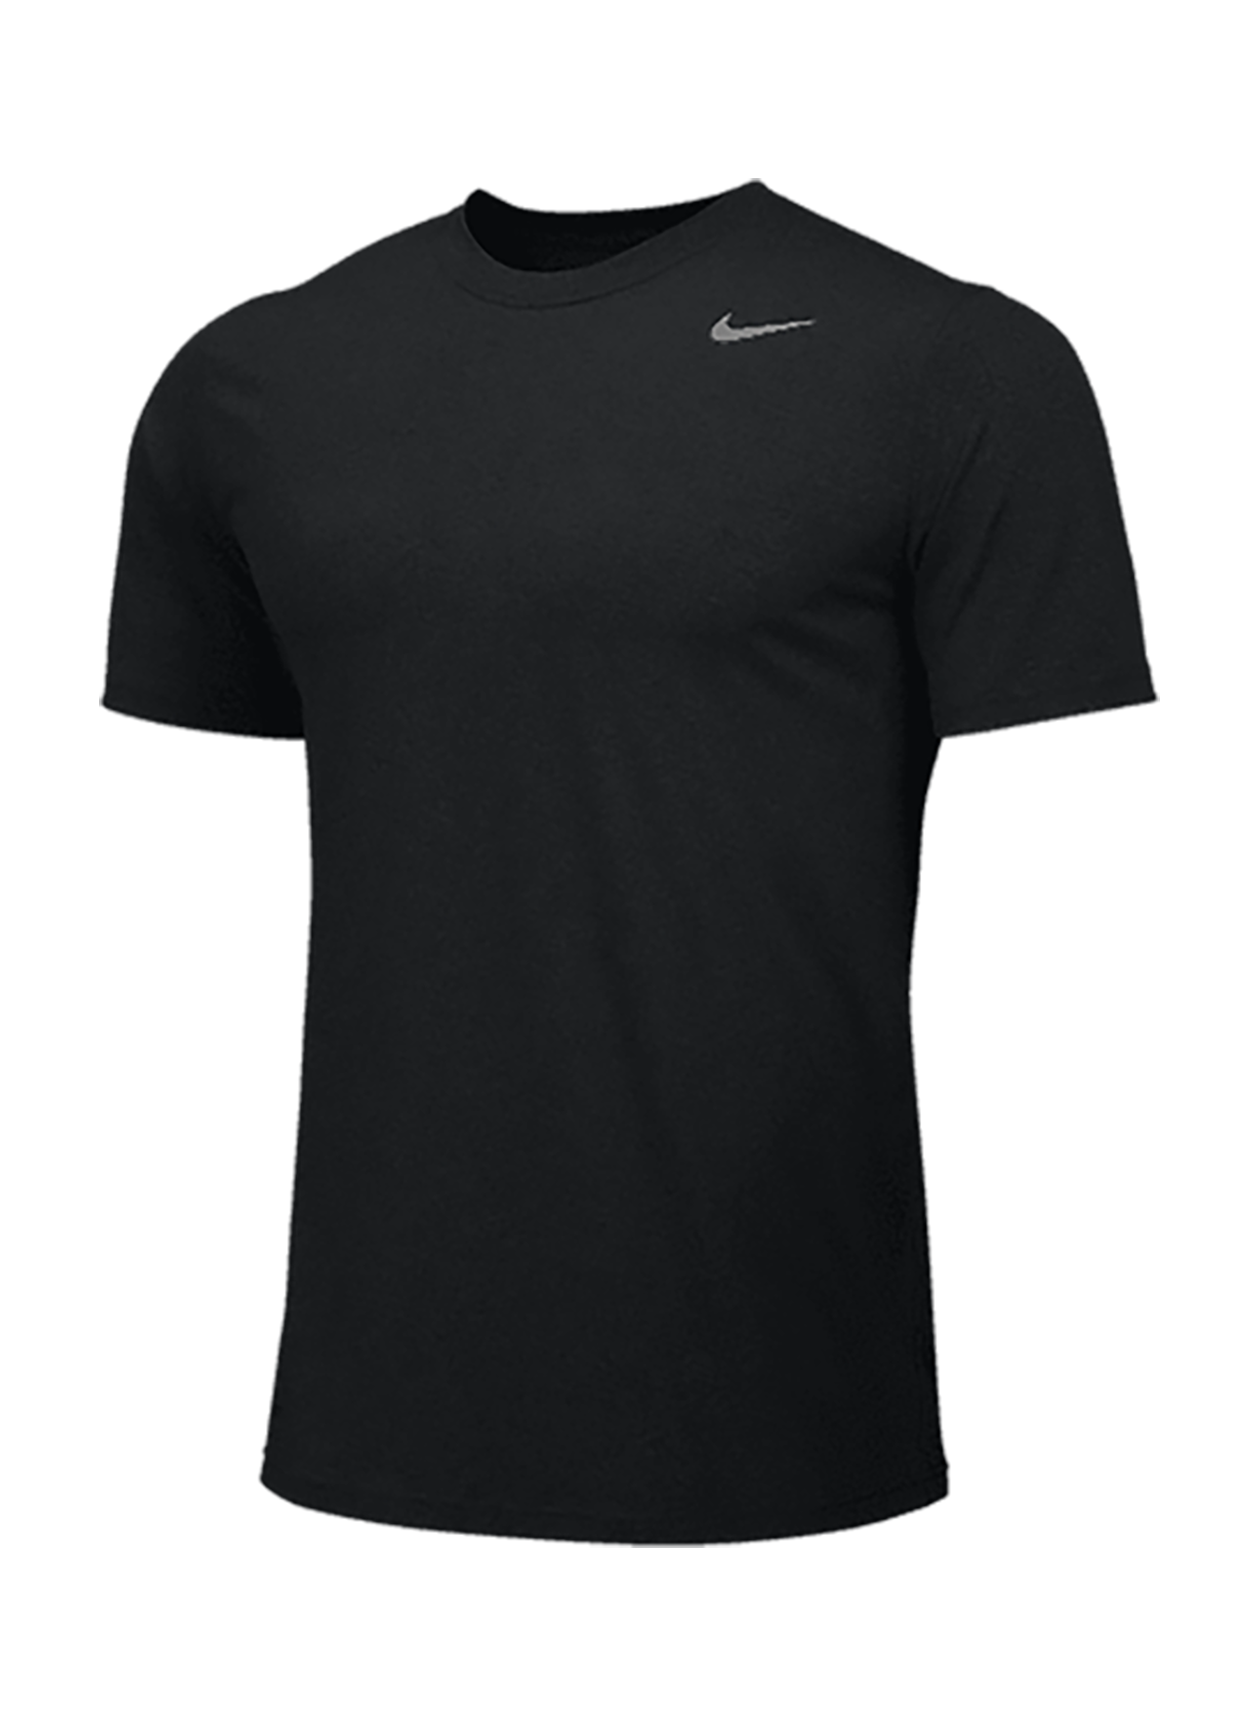 Custom T-shirts  Screen Printed Nike Men's Black Dri-FIT Legend T